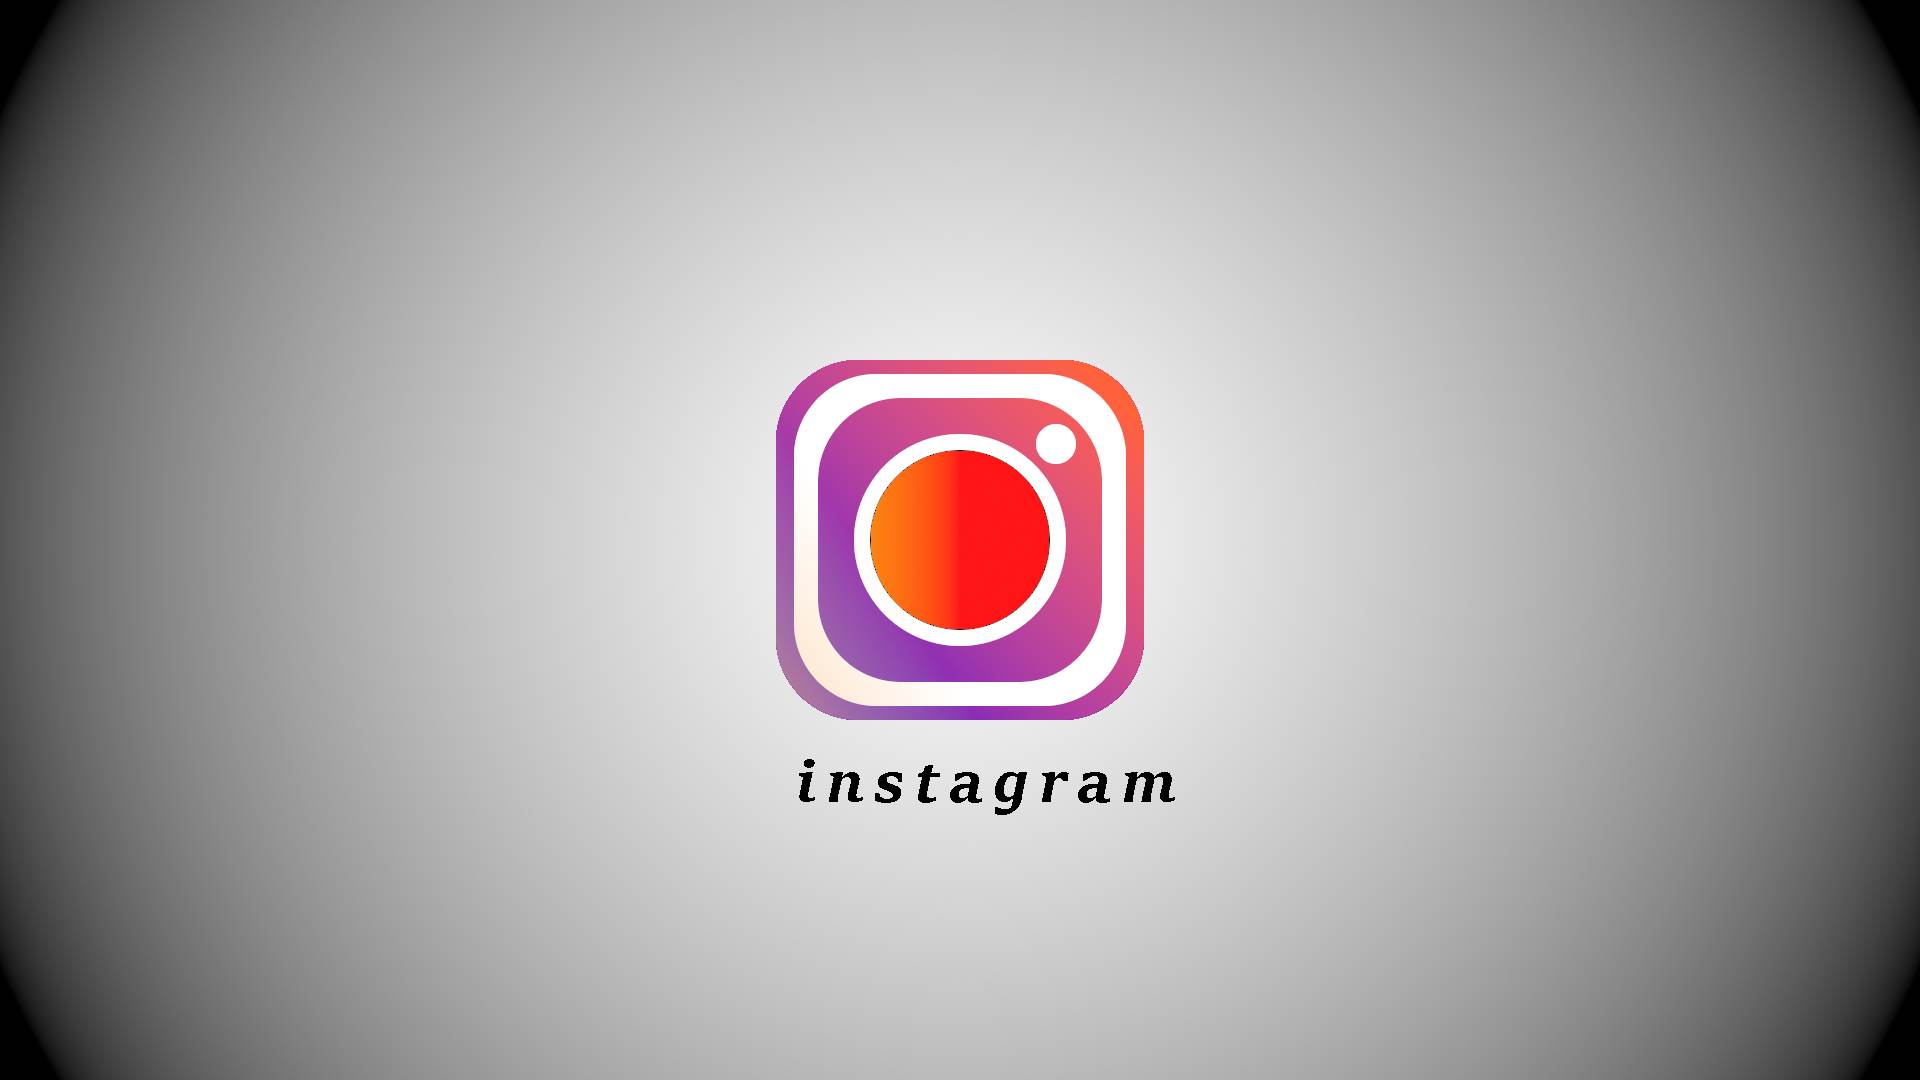 instagramlogo.png -  by mackenzieh